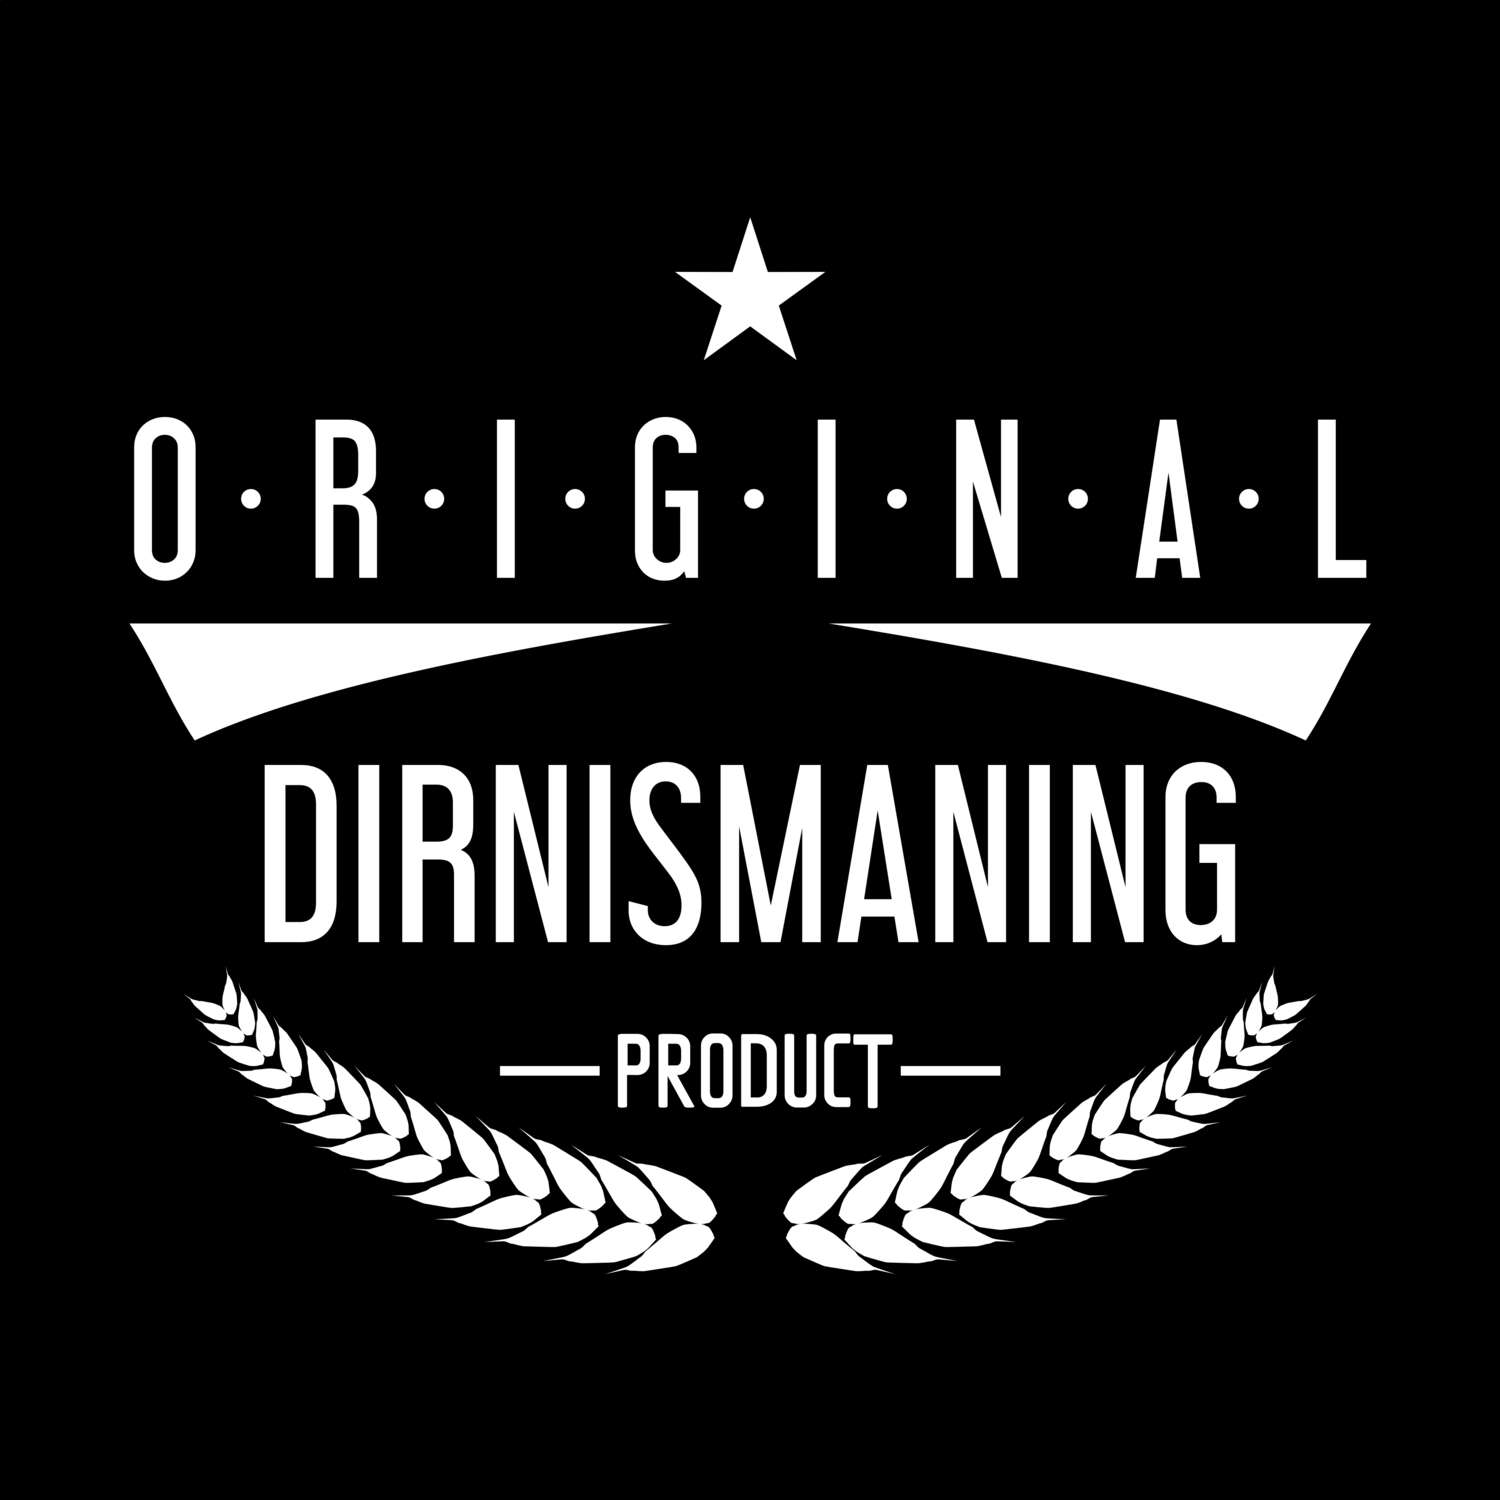 Dirnismaning T-Shirt »Original Product«